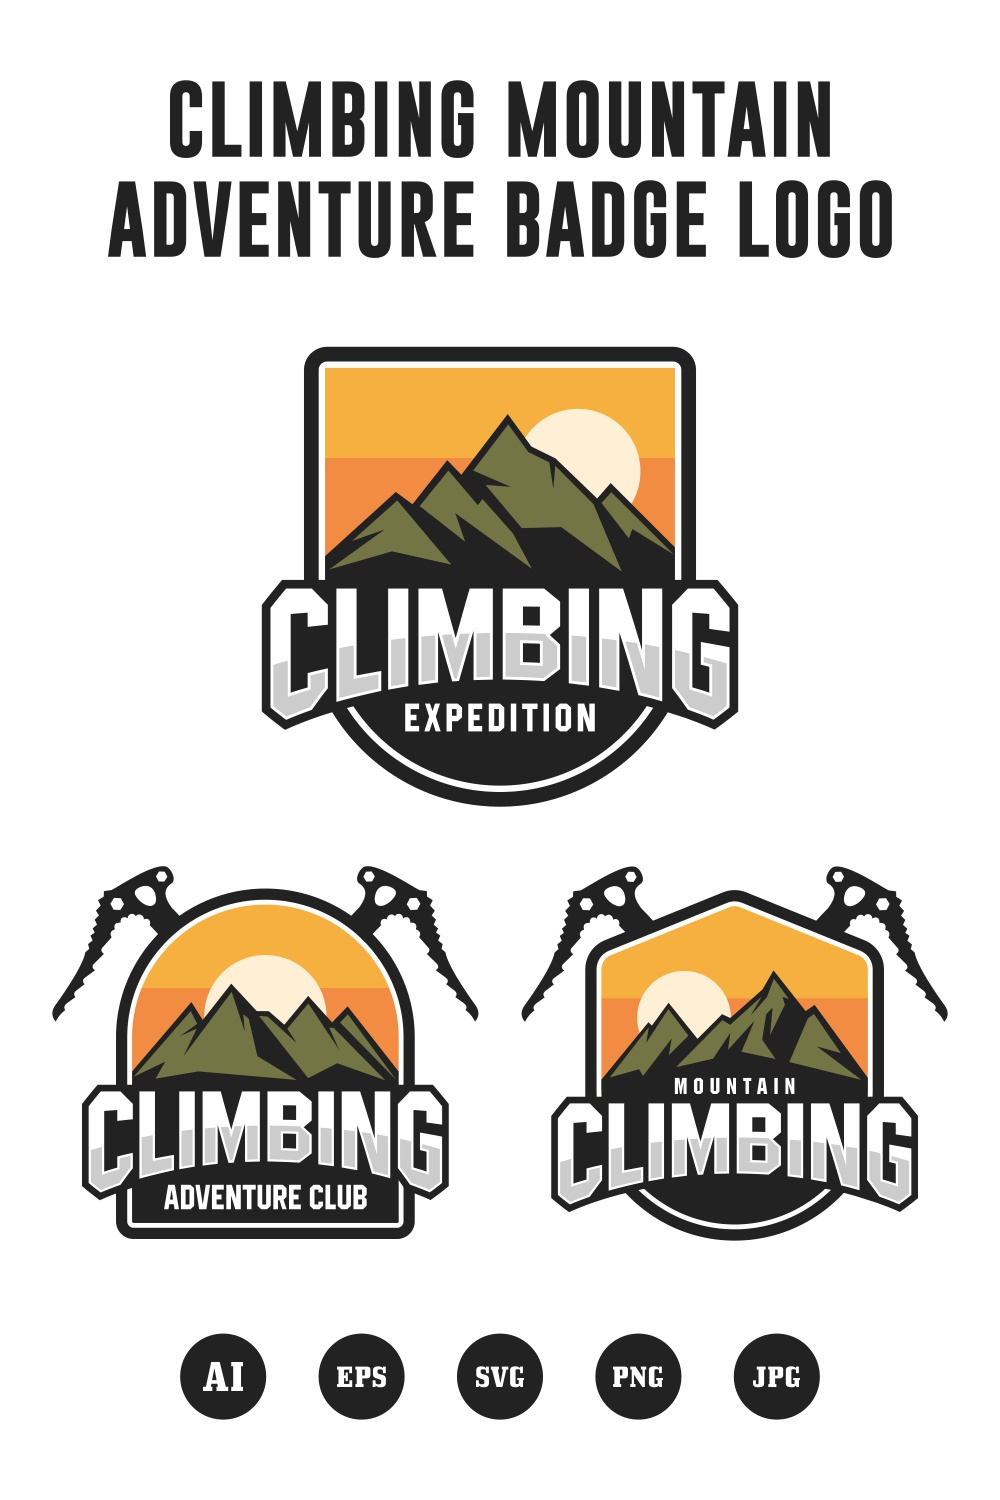 Set Climbing mountain adventure badge design collection - $4 pinterest preview image.